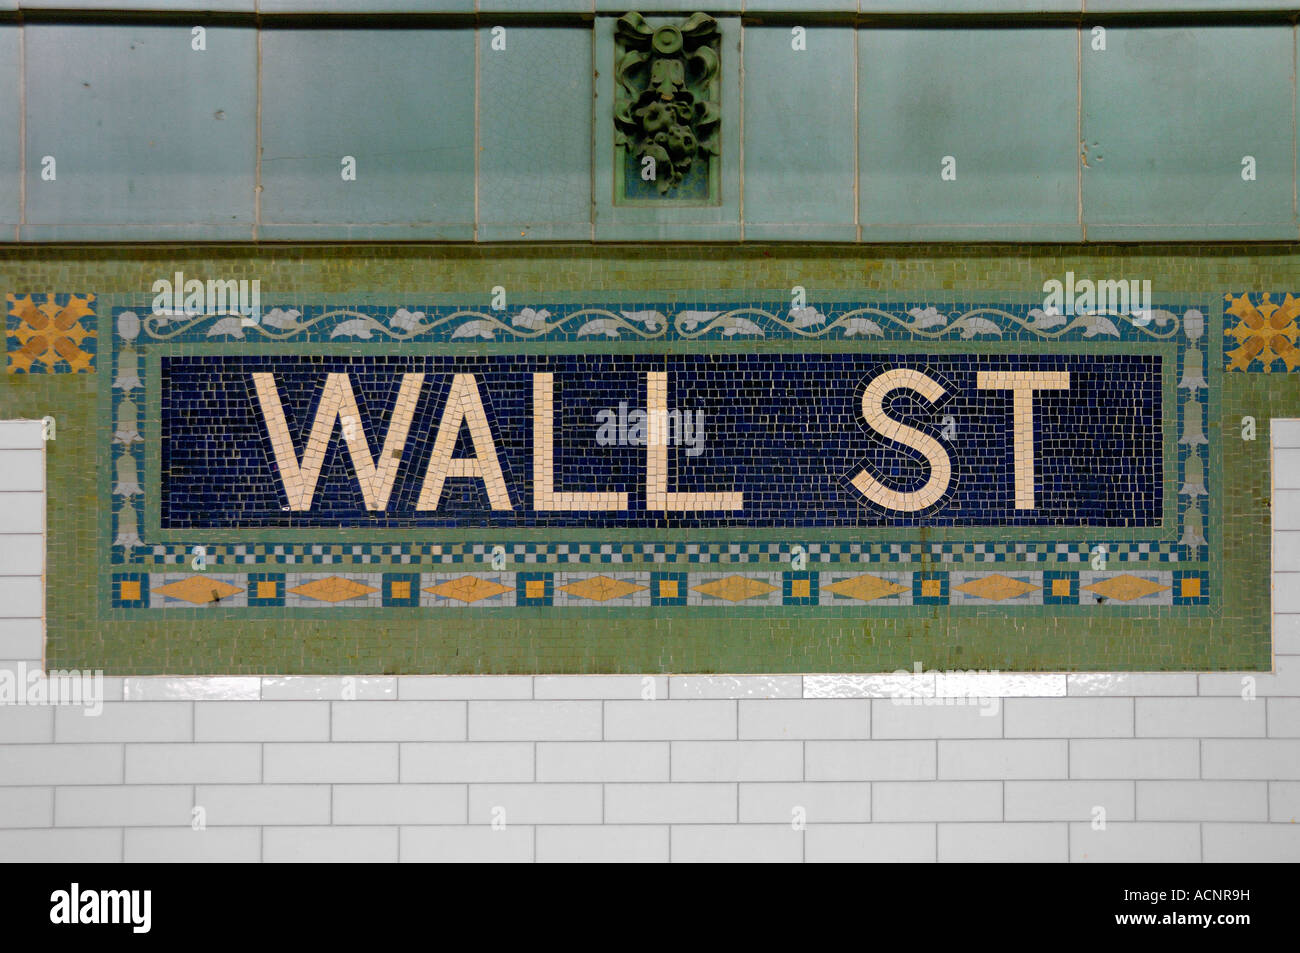 La station de métro Wall Street New York Etats-unis mosaïque Banque D'Images